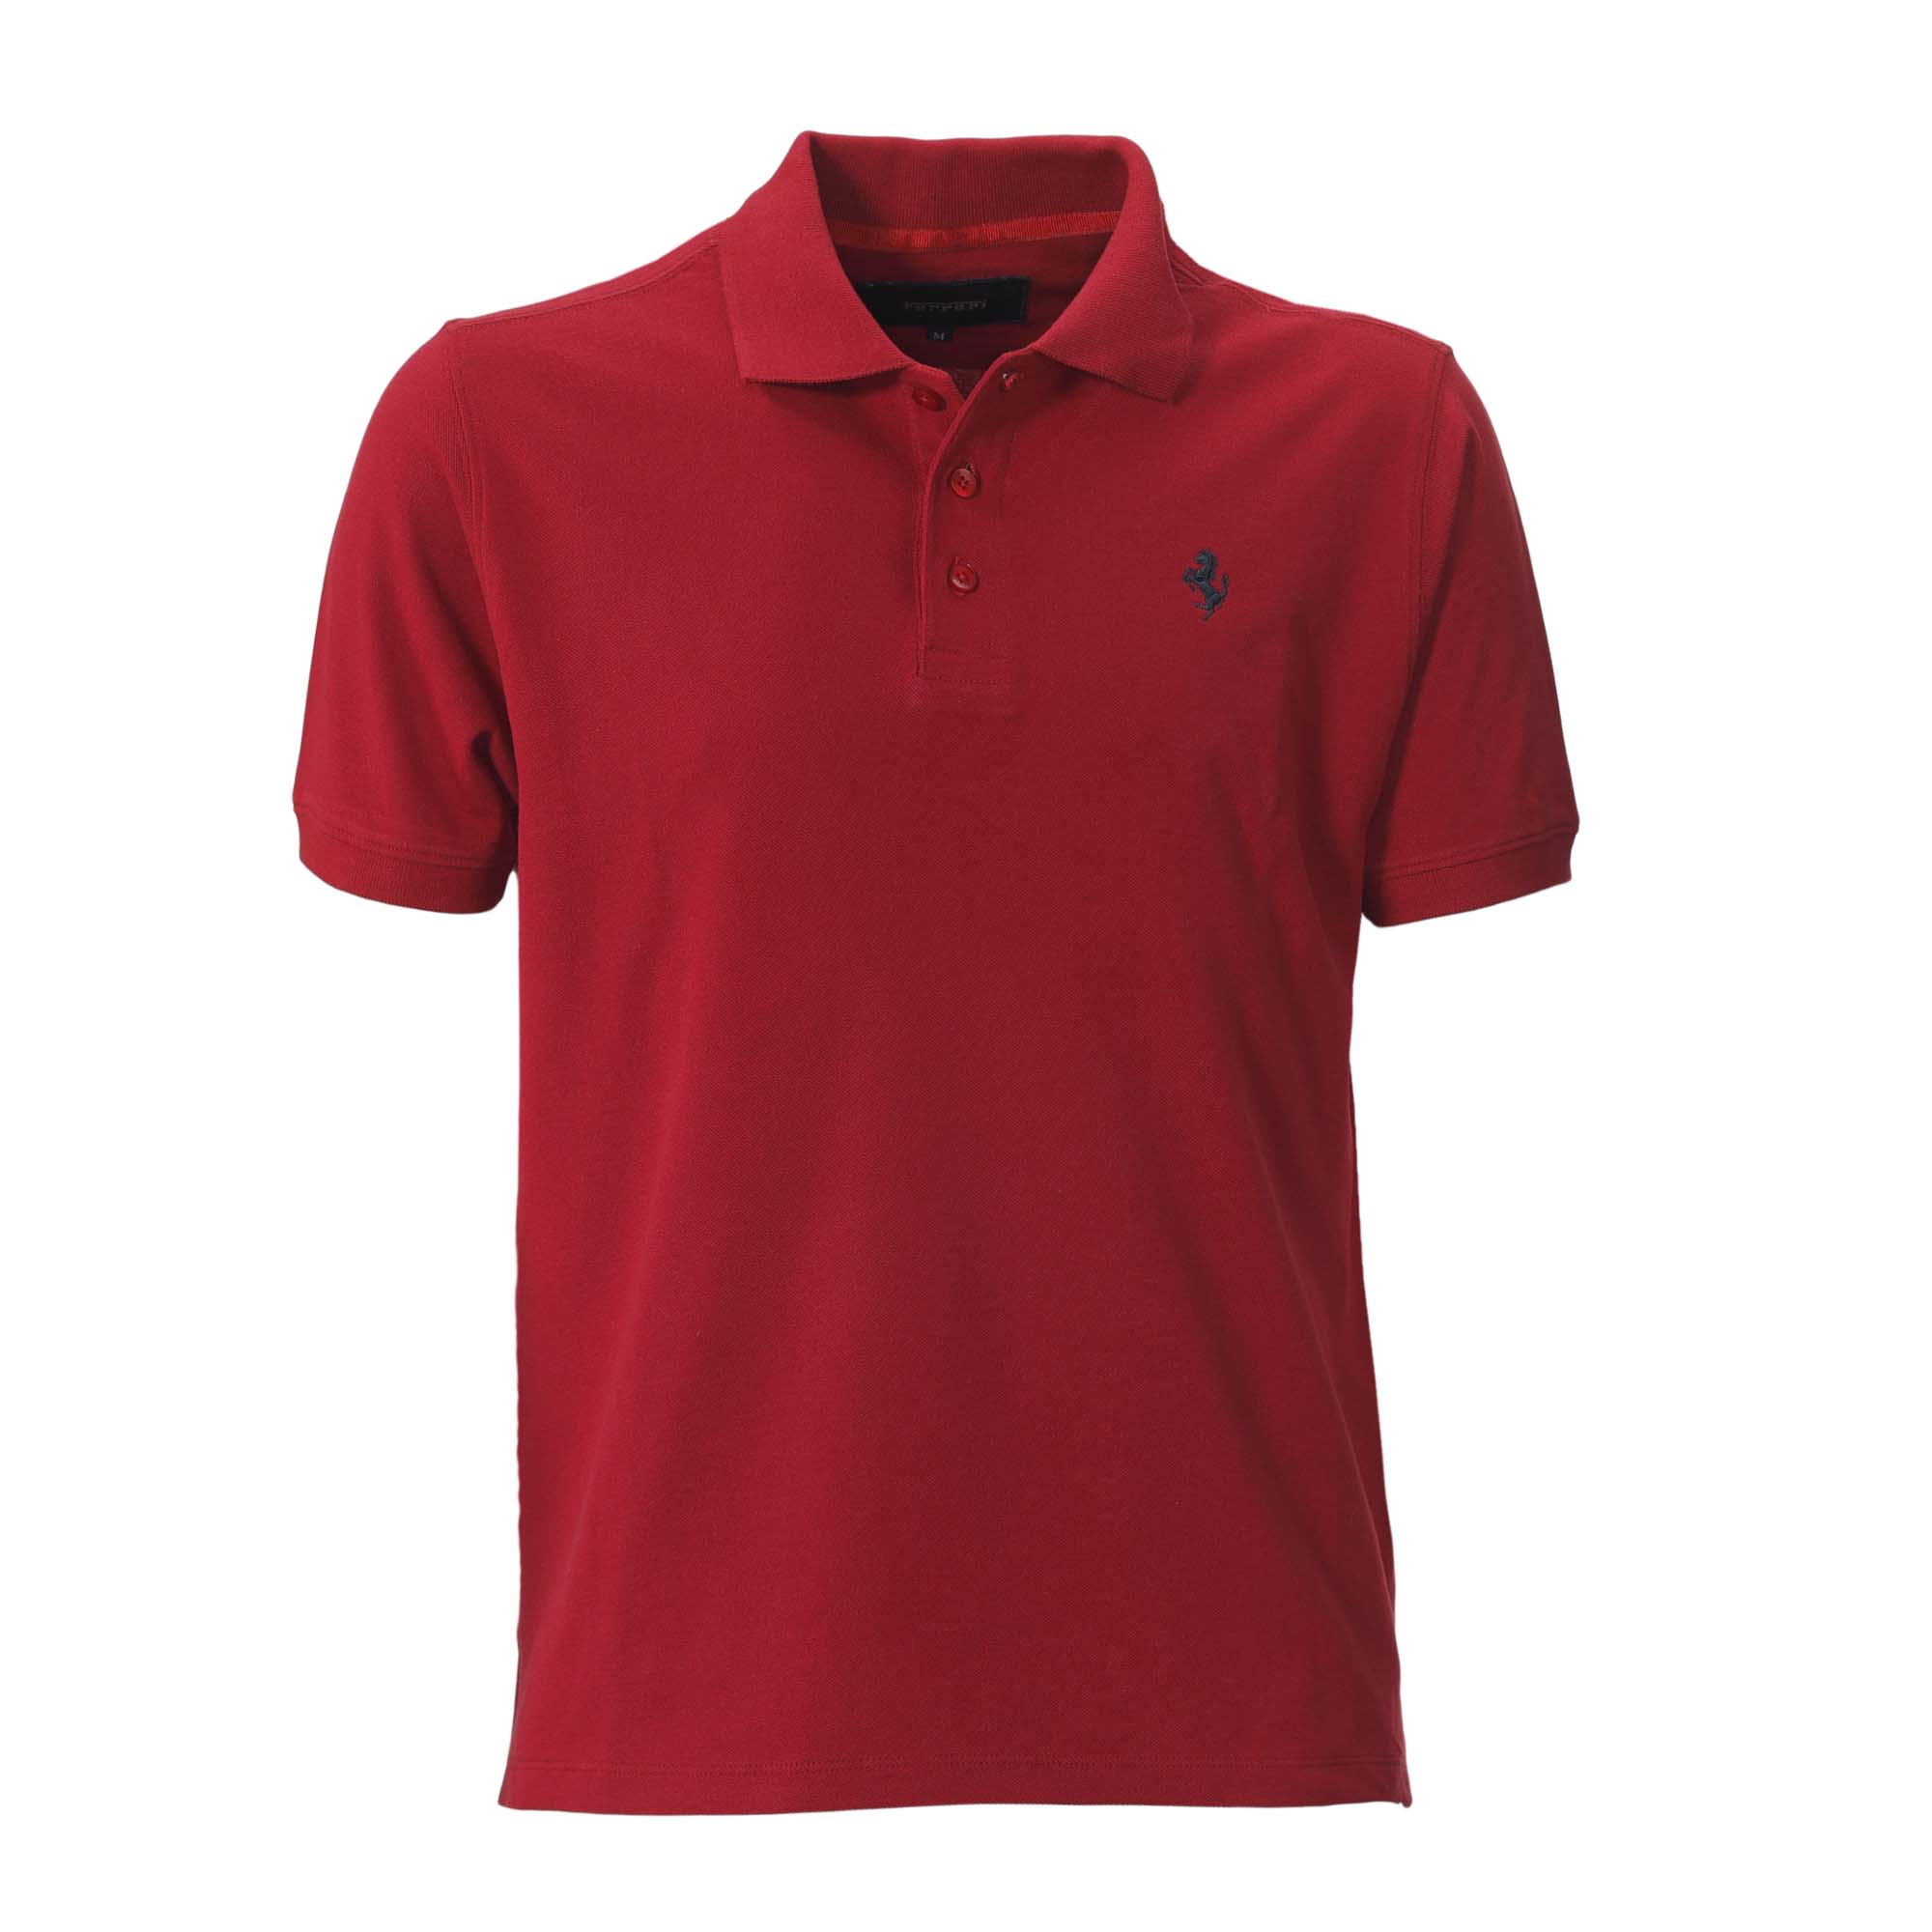 Flat Red Polo Shirt For Men - Bewoda International - Manufacturer and ...